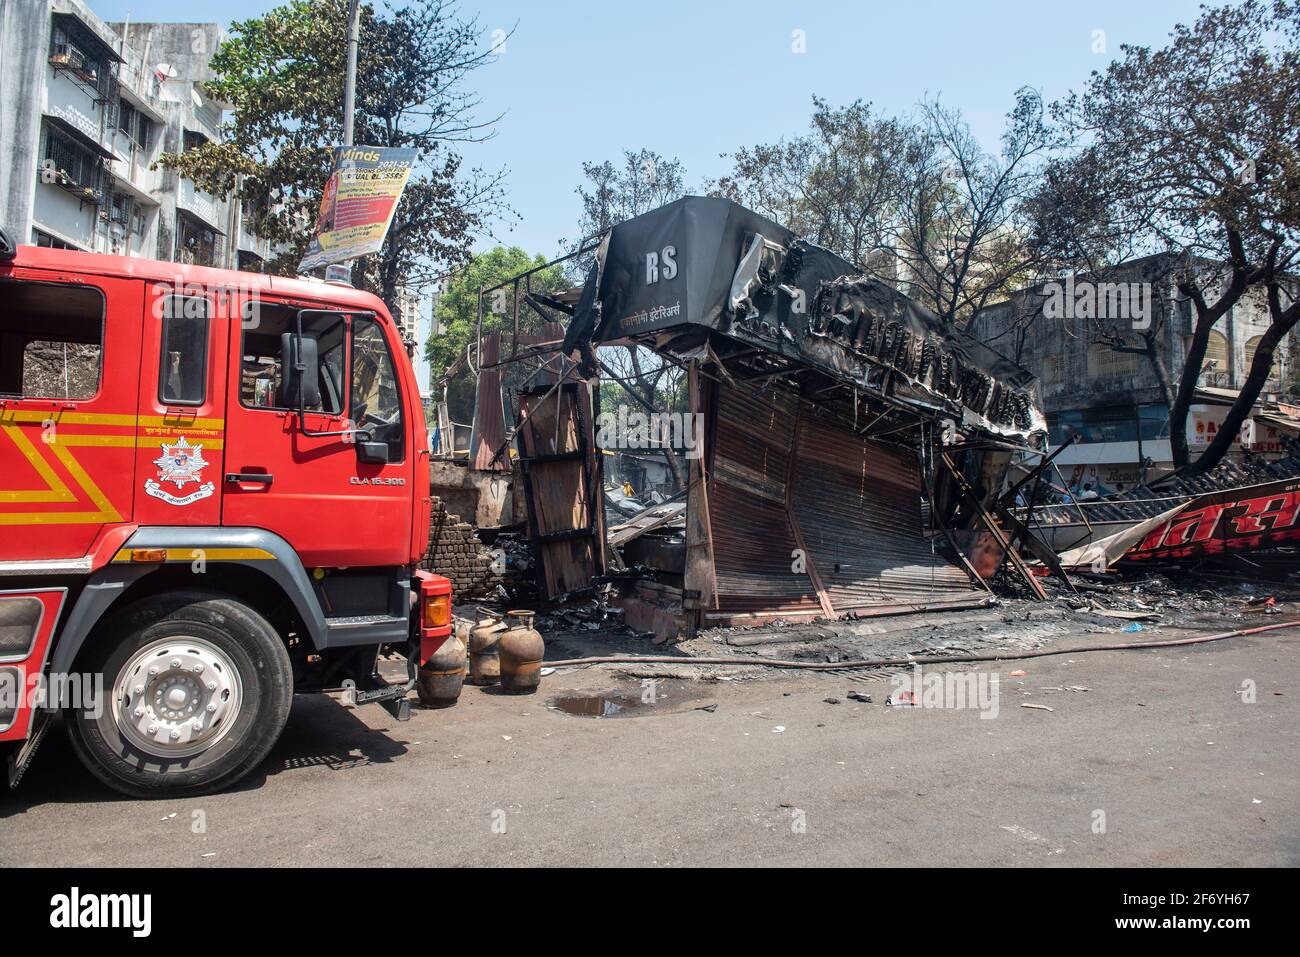 Mumbai , India - 30 March 2021, A view of the outside of a burned cloth store shop at Goregaon West market in Mumbai Maharashtra India Stock Photo